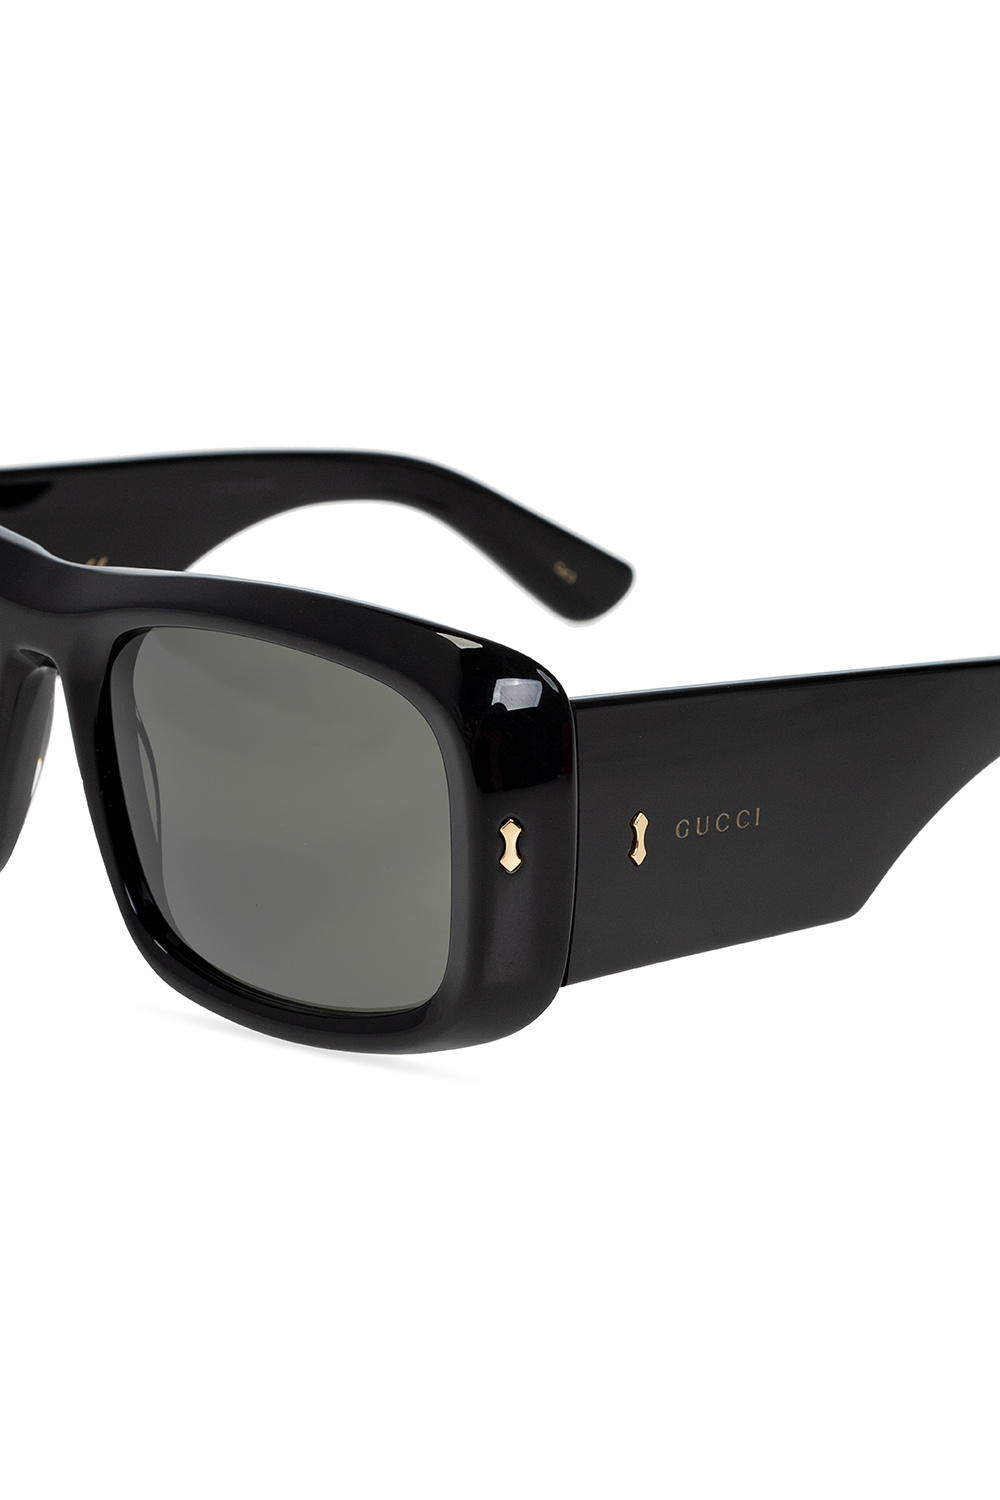 Gucci Oakley Radar Ev Path aviator sunglasses